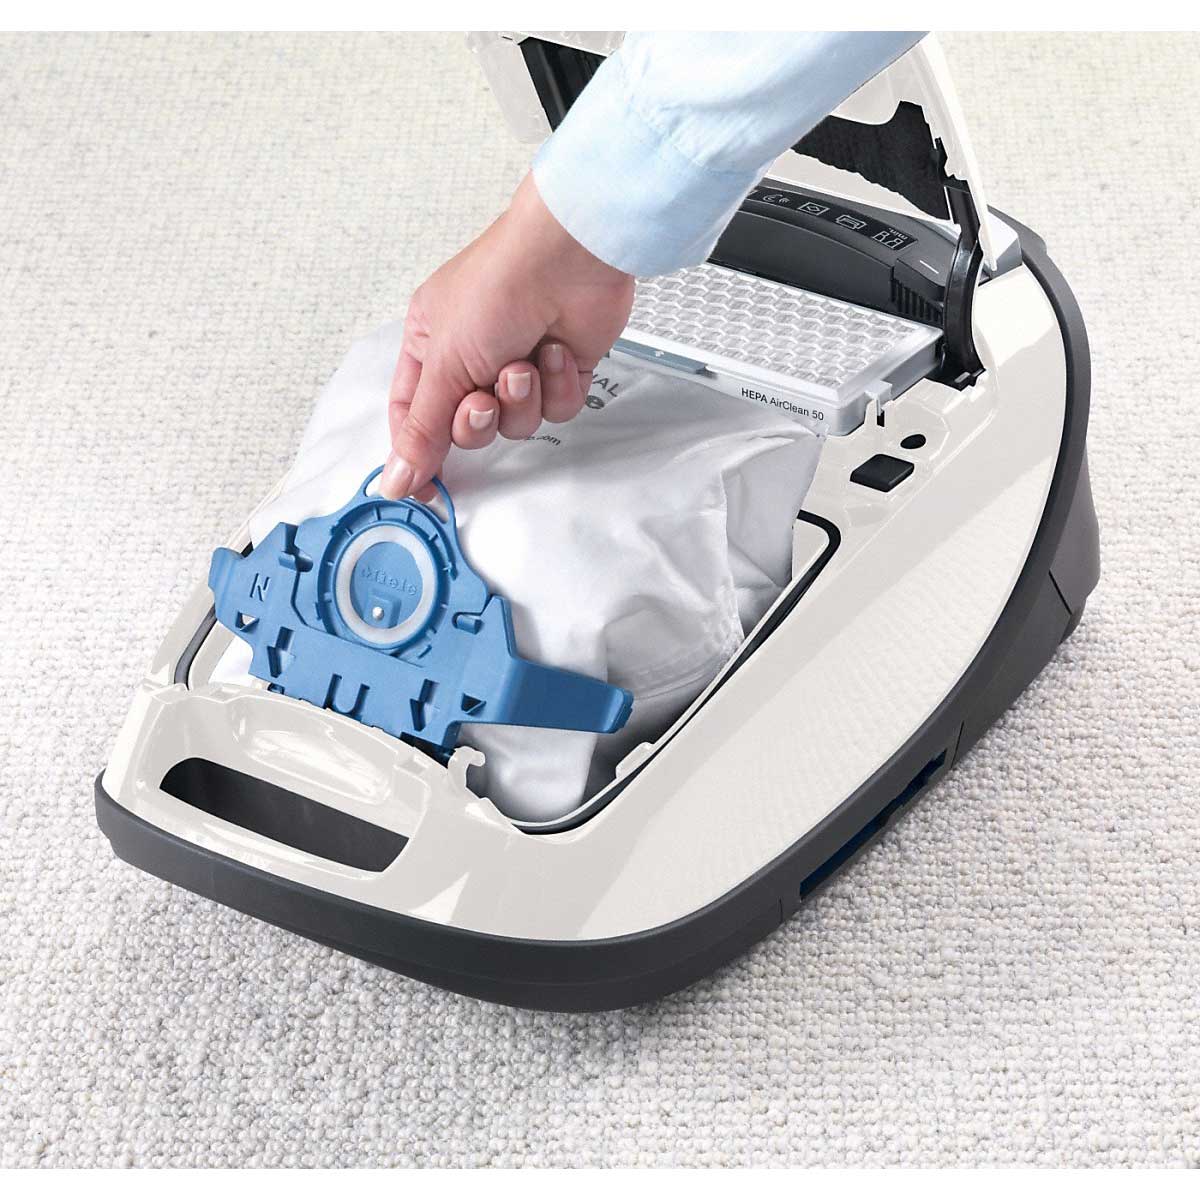 Miele GN HyClean 3D Vacuum Bags 9917730